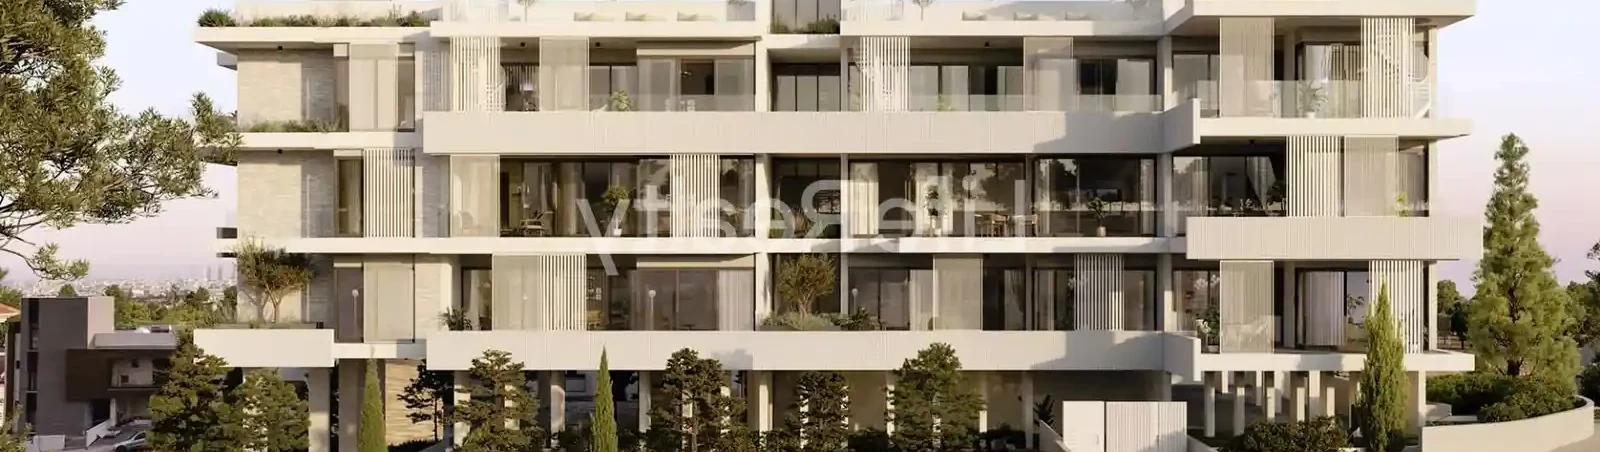 3-bedroom penthouse fоr sаle €885.000, image 1